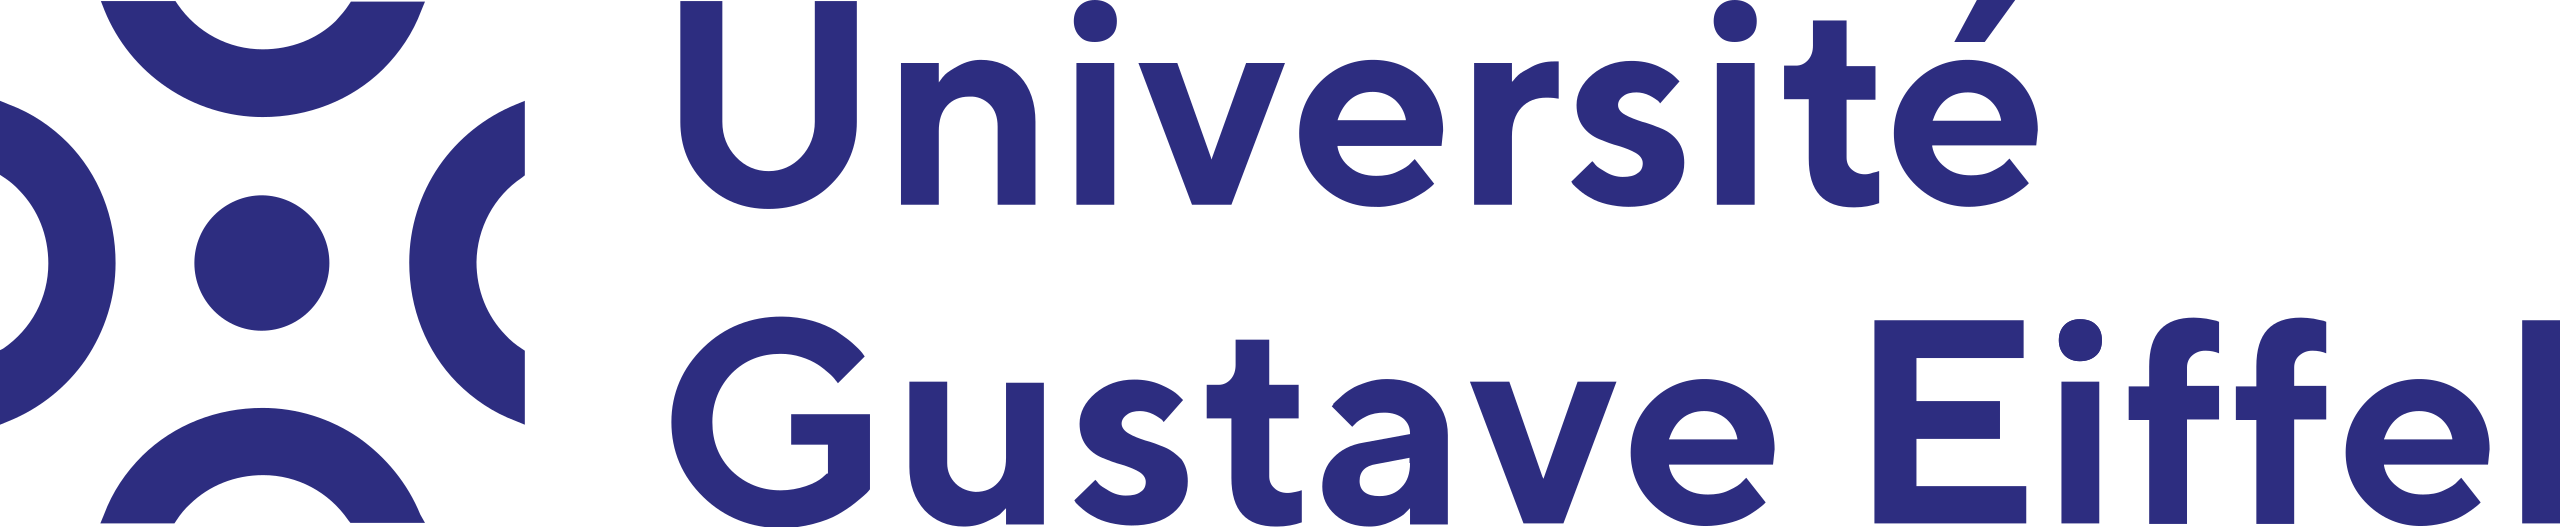 University Gustave Eiffel logo